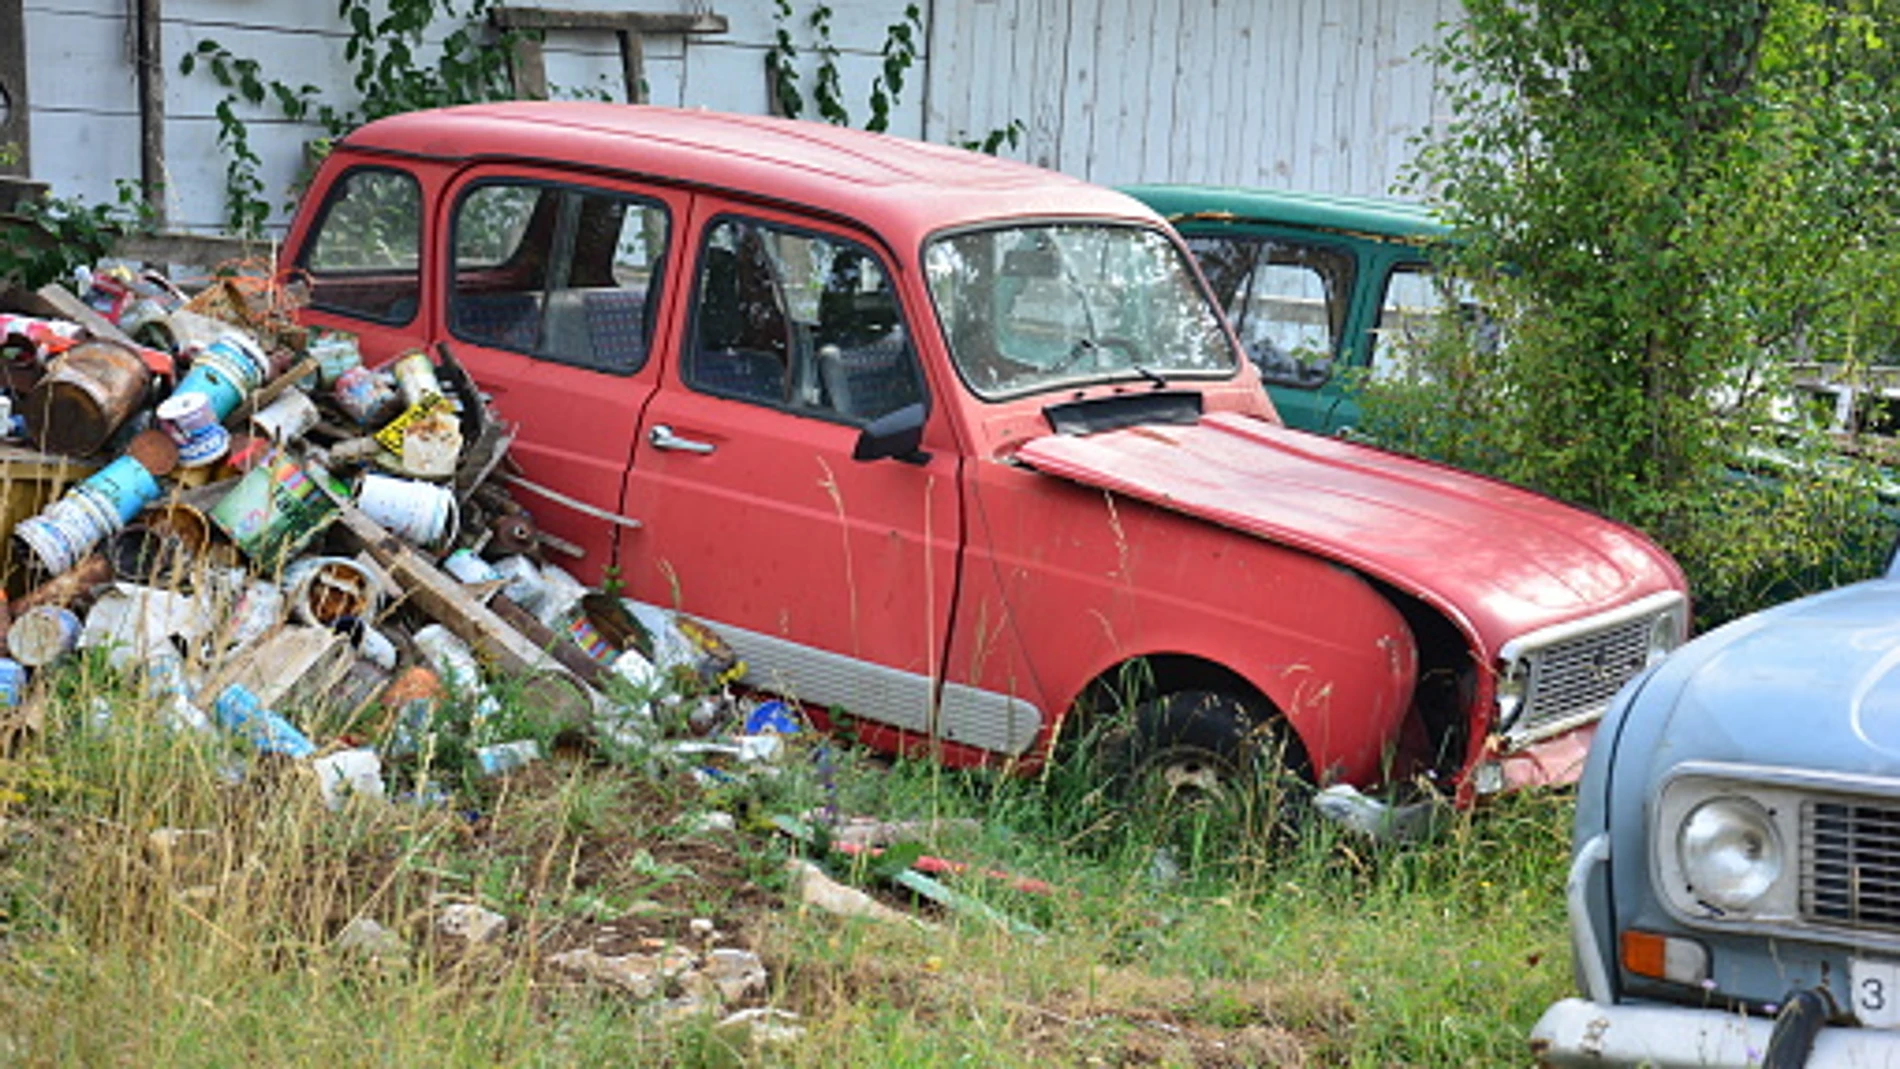 Imagen de archivo Renault 4L rojo